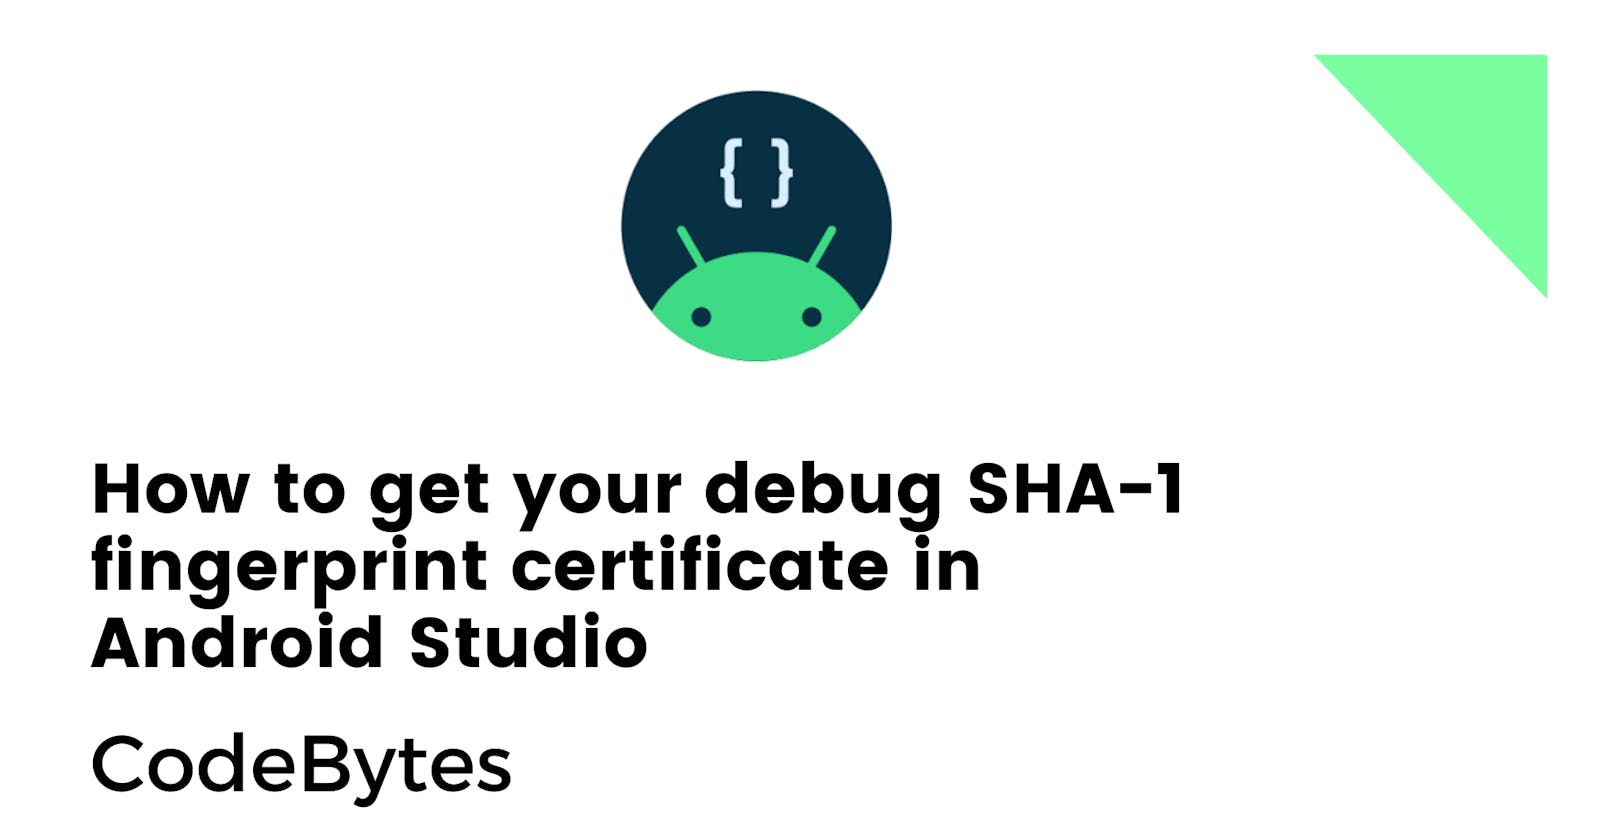 How to get your debug SHA-1 fingerprint certificate in Android Studio